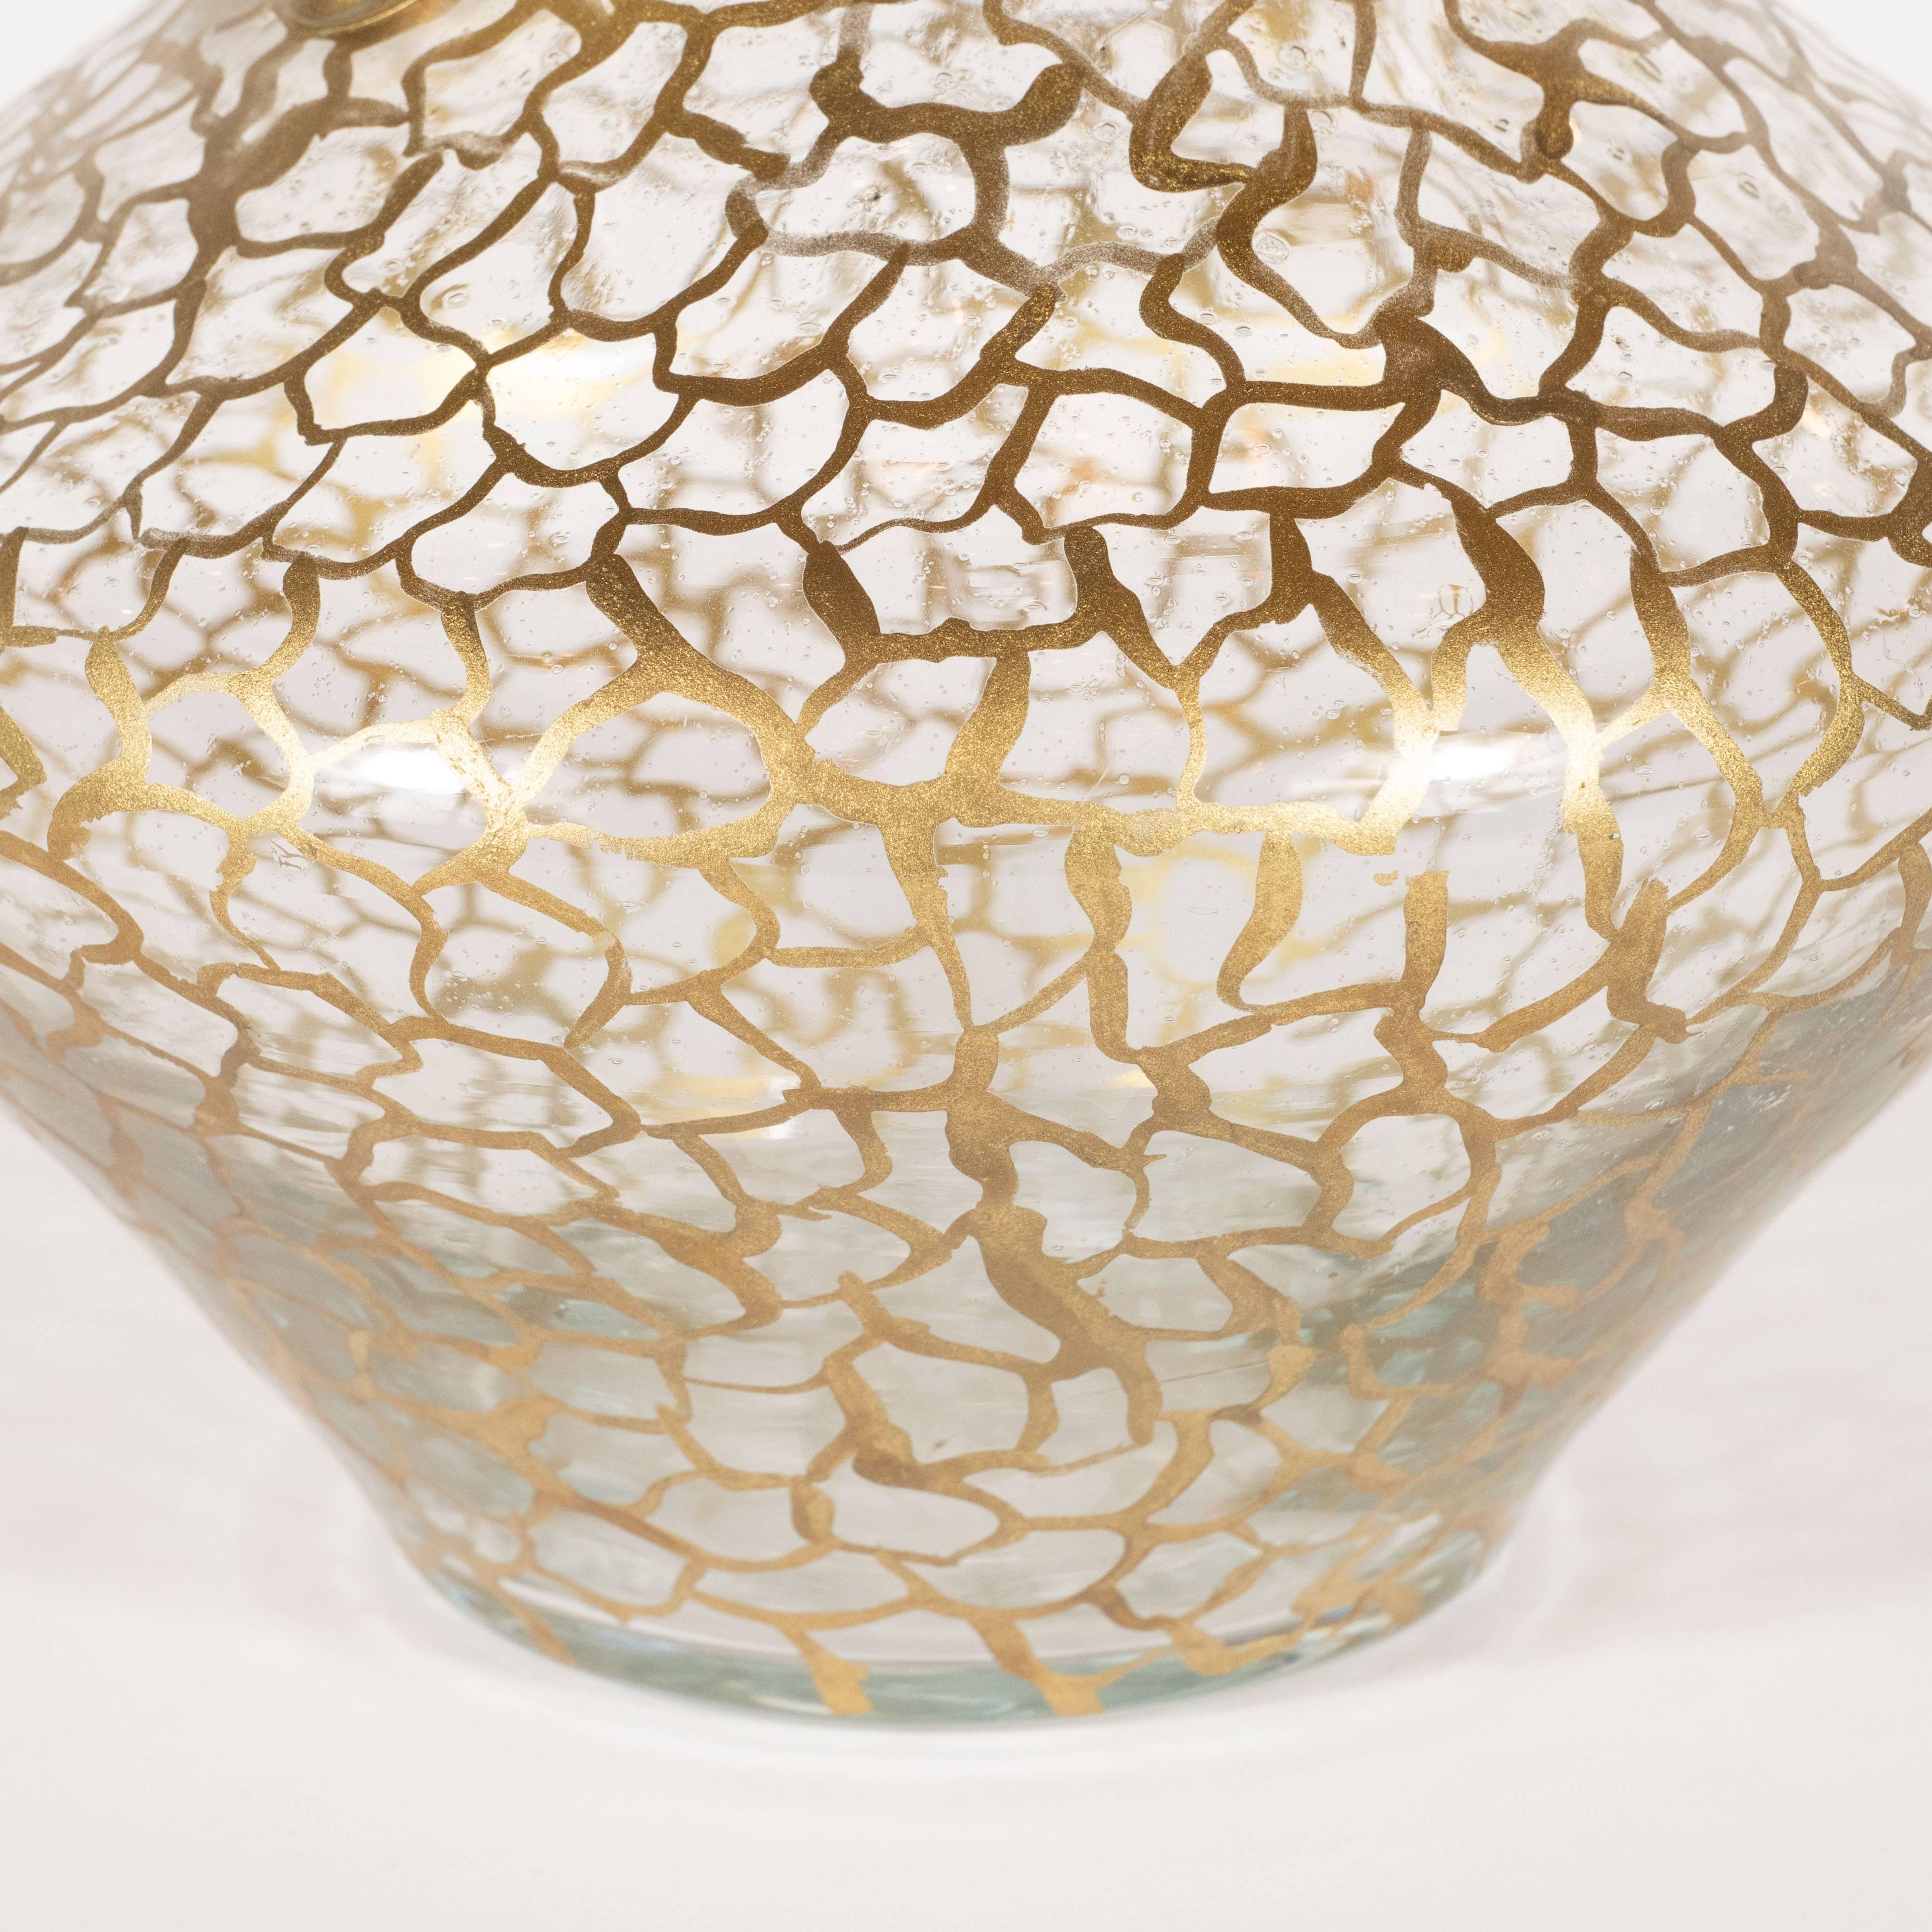 Czech Art Deco Sculptural Organic Glass Vase with Hand-Painted Gilt Detailing